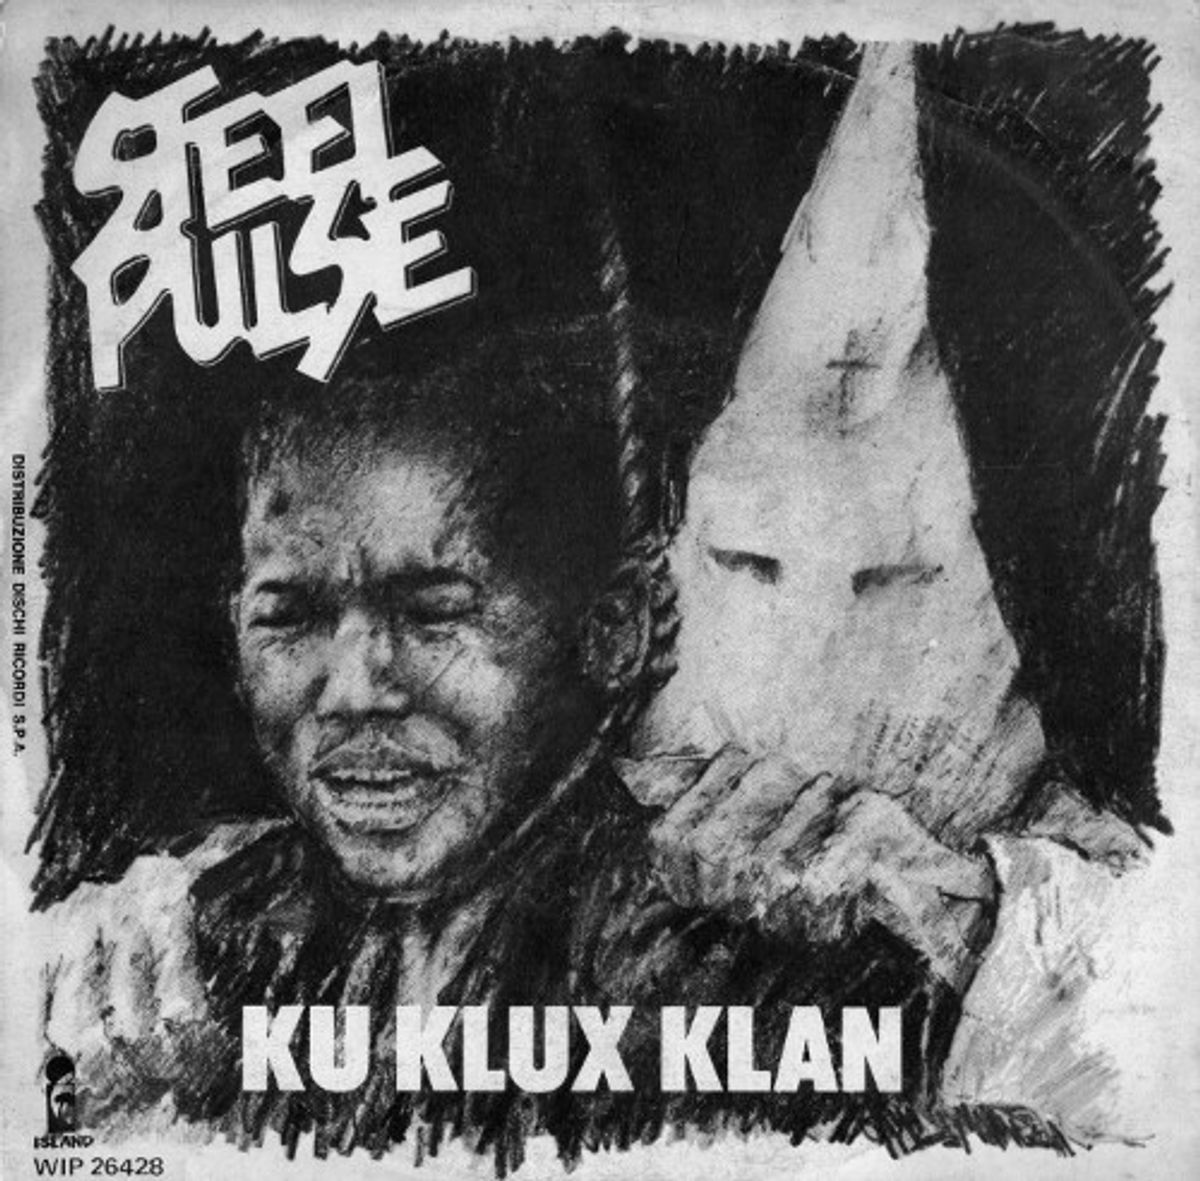 #Britreggae - Steel Pulse - Ku Klux Klan (1978)